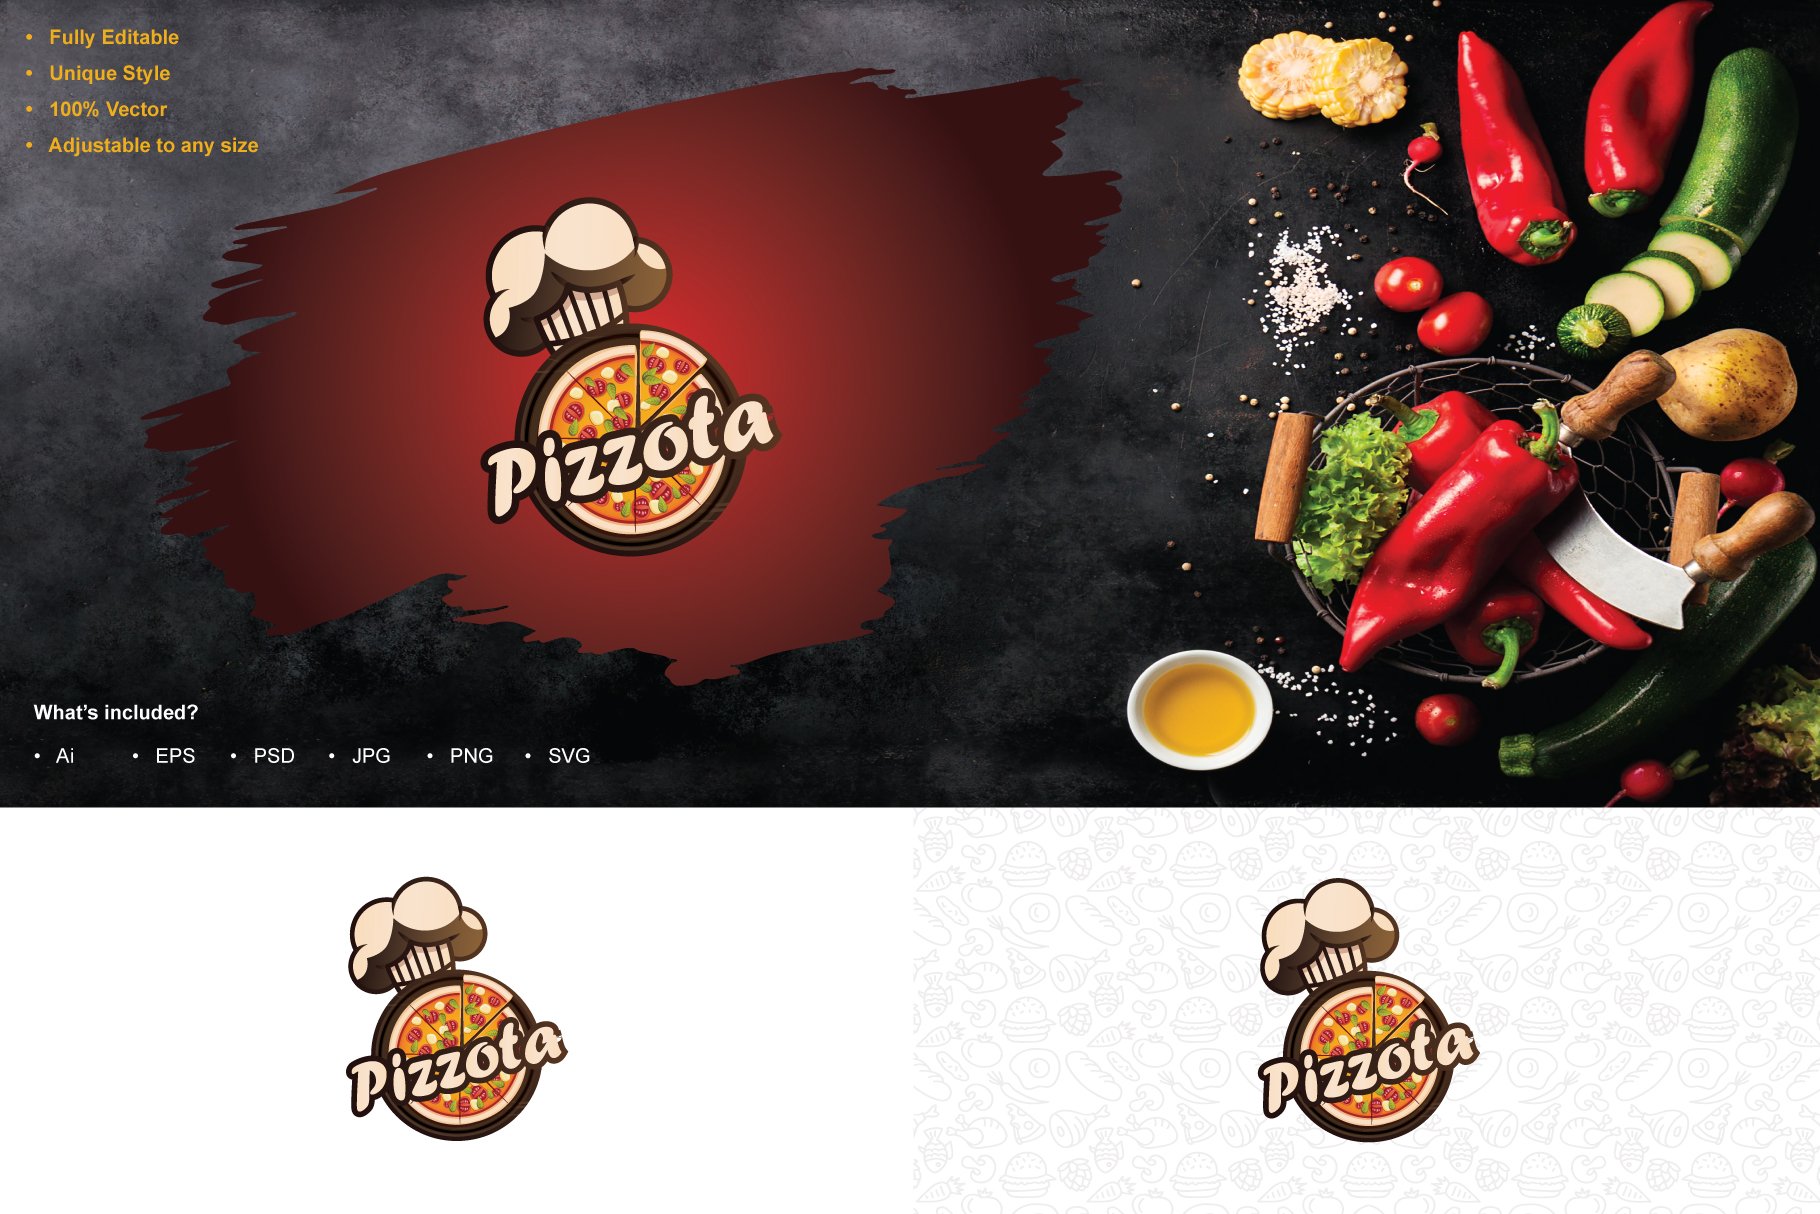 Pizzota Logo cover image.